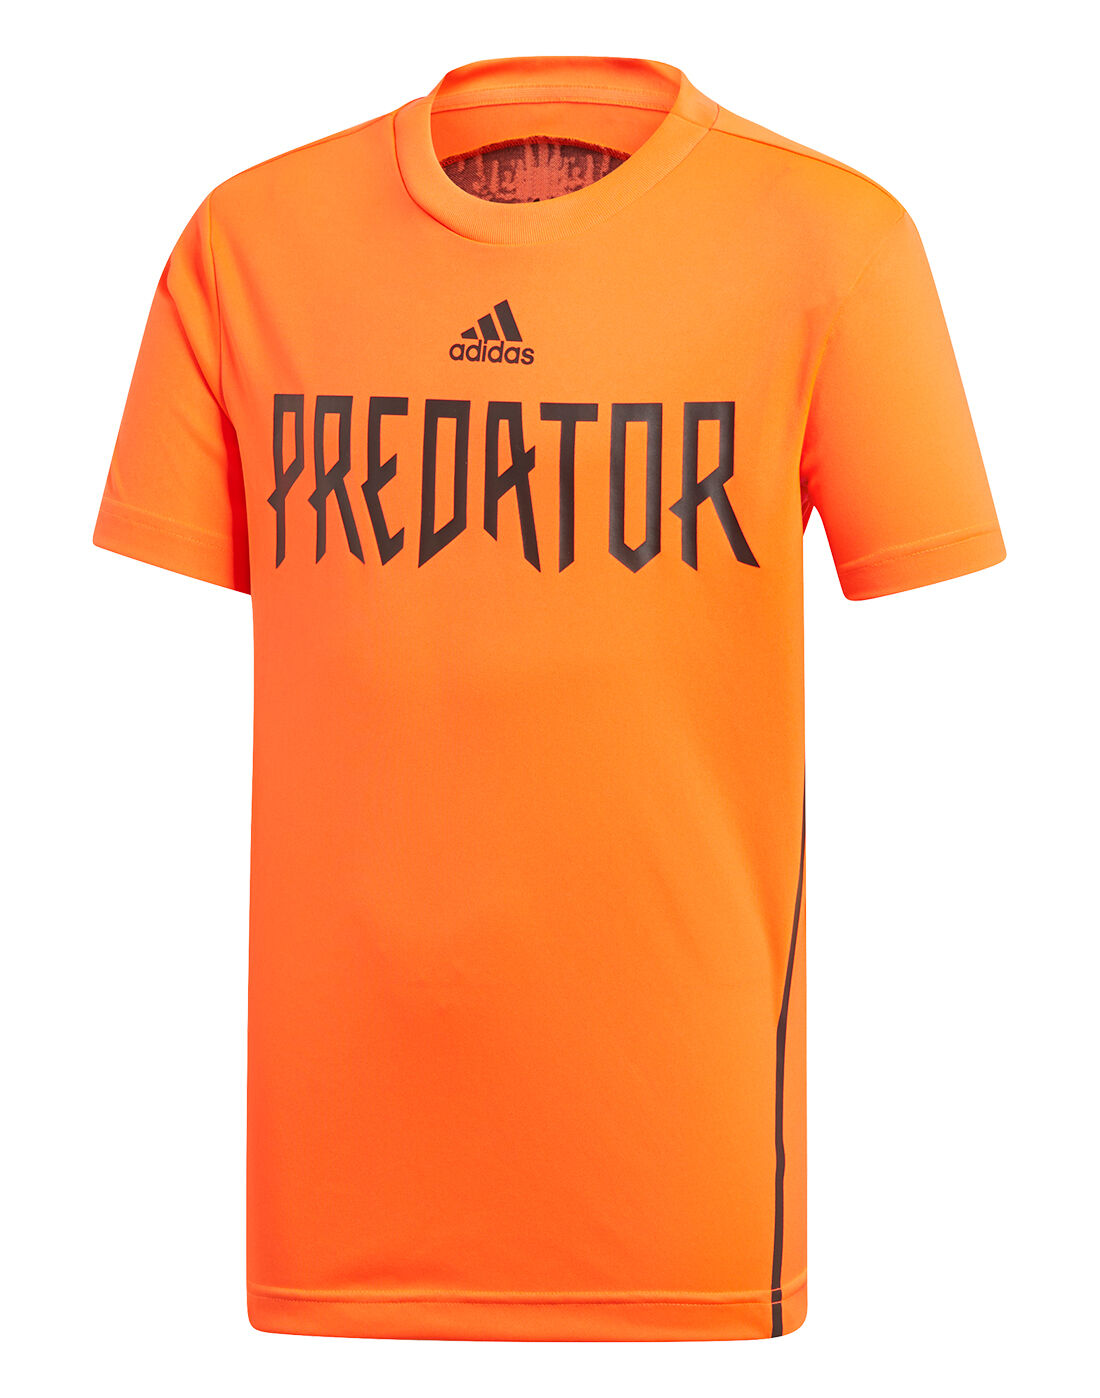 adidas predator jersey